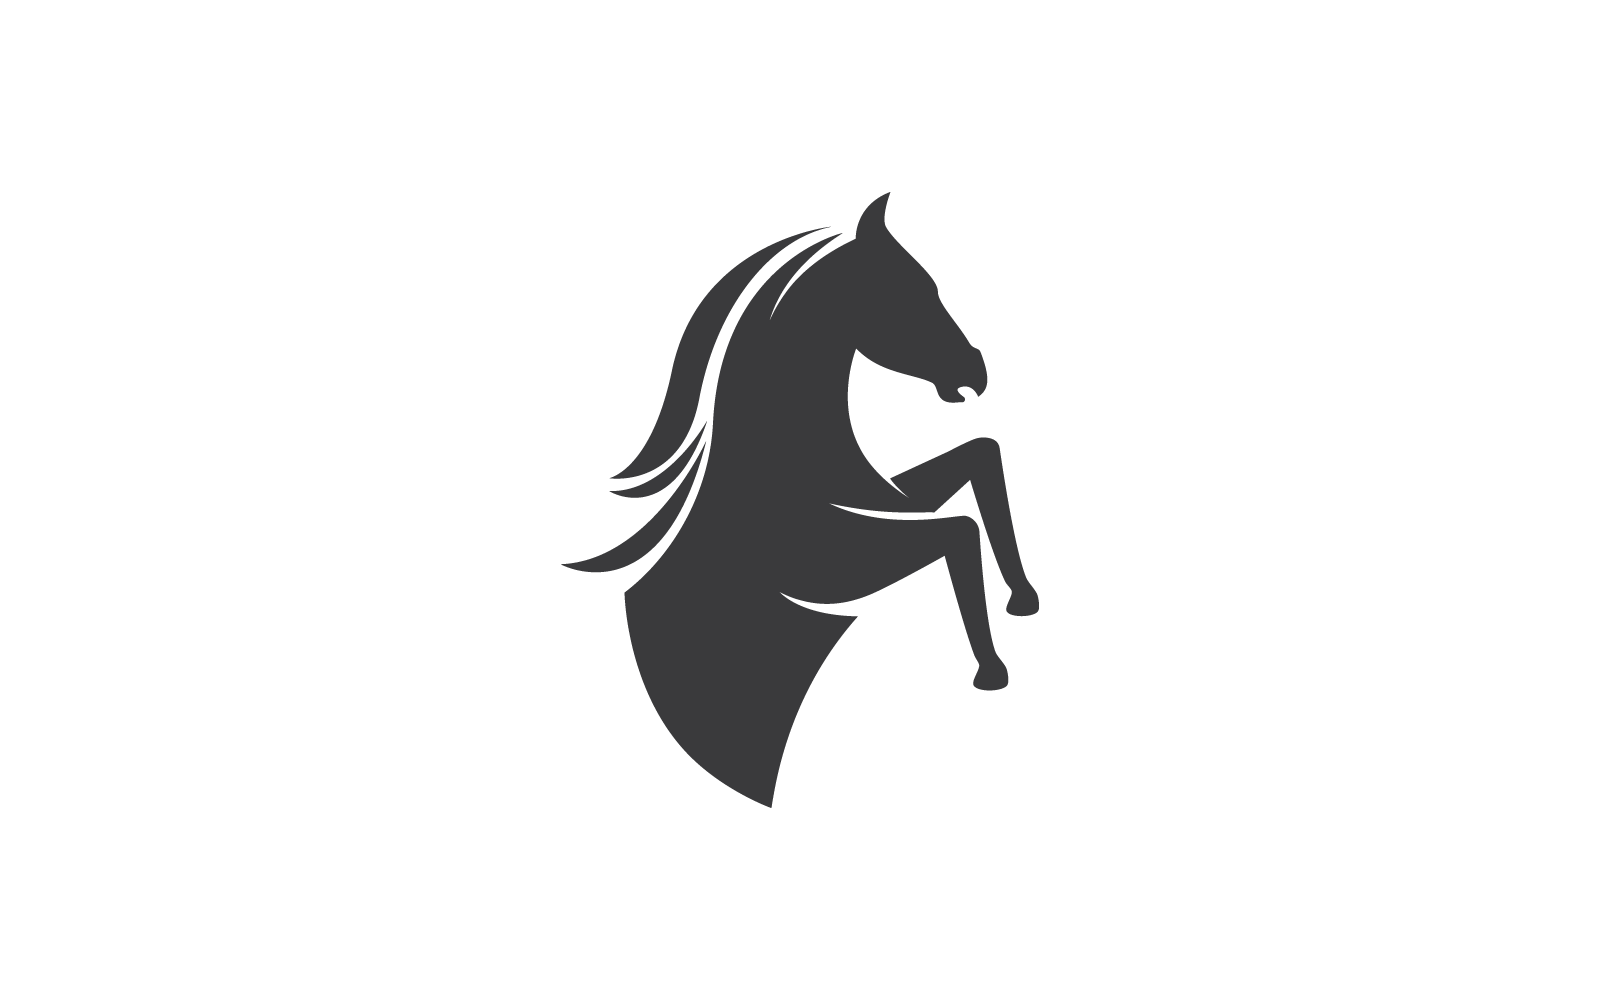 Koń ilustracja logo wektor płaski szablon projektu